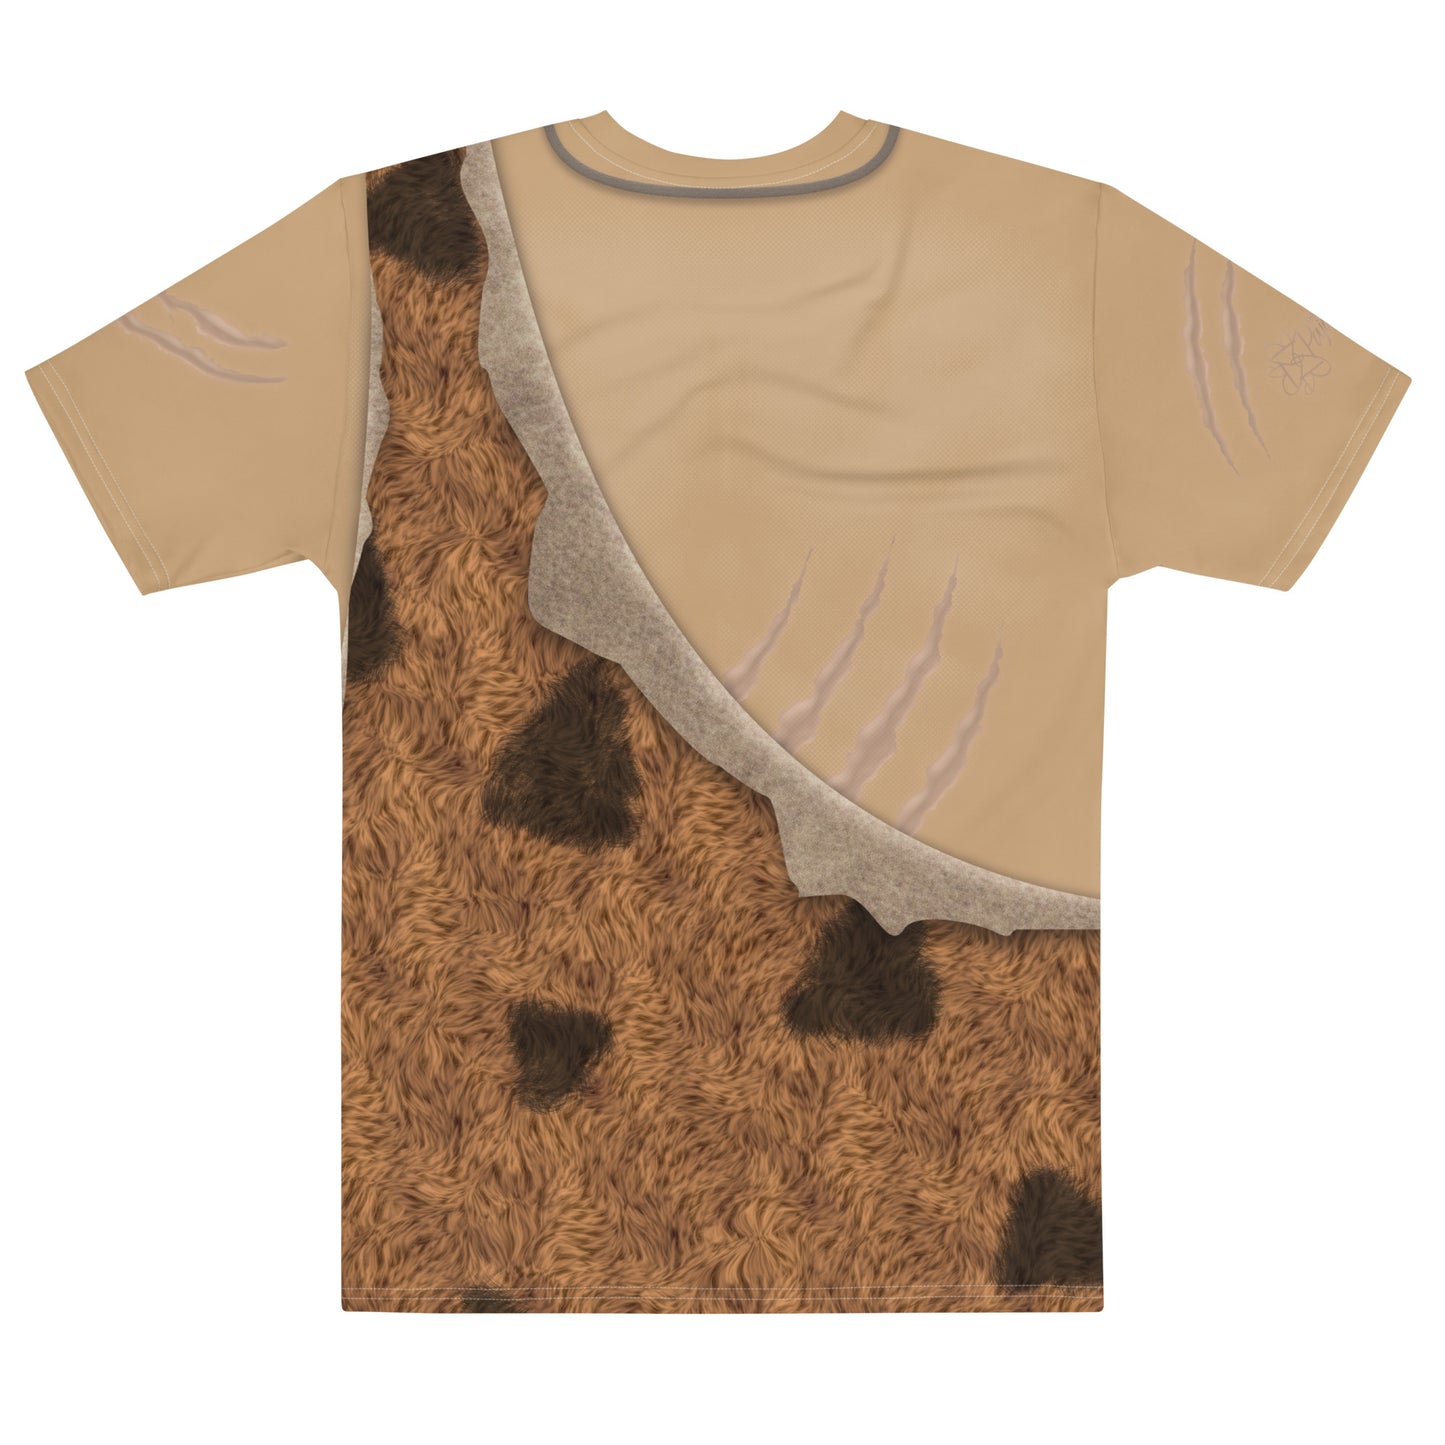 Pajamgeries Men's T-shirt - Caveman - Ivory